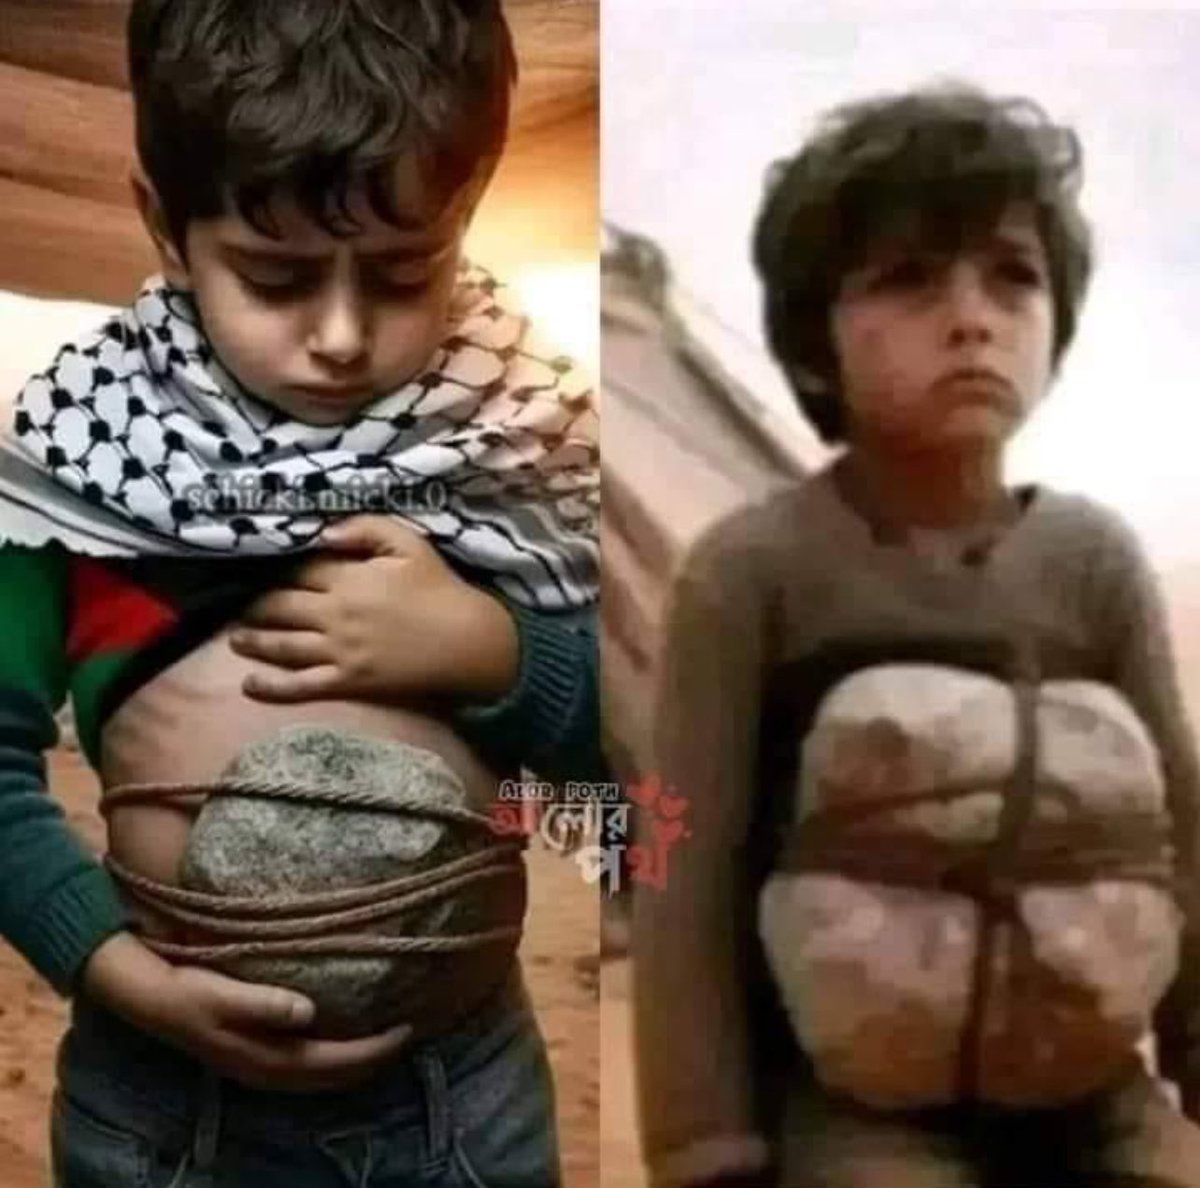 #Saveghazachildren #Savephalastine #Stopgenocideinghaza 
فلسطینی بچے بھوک سے مر رہے ہیں اور ہمارے بچے عیاشیاں کر رہے ہیں  😢😢😢😢😢